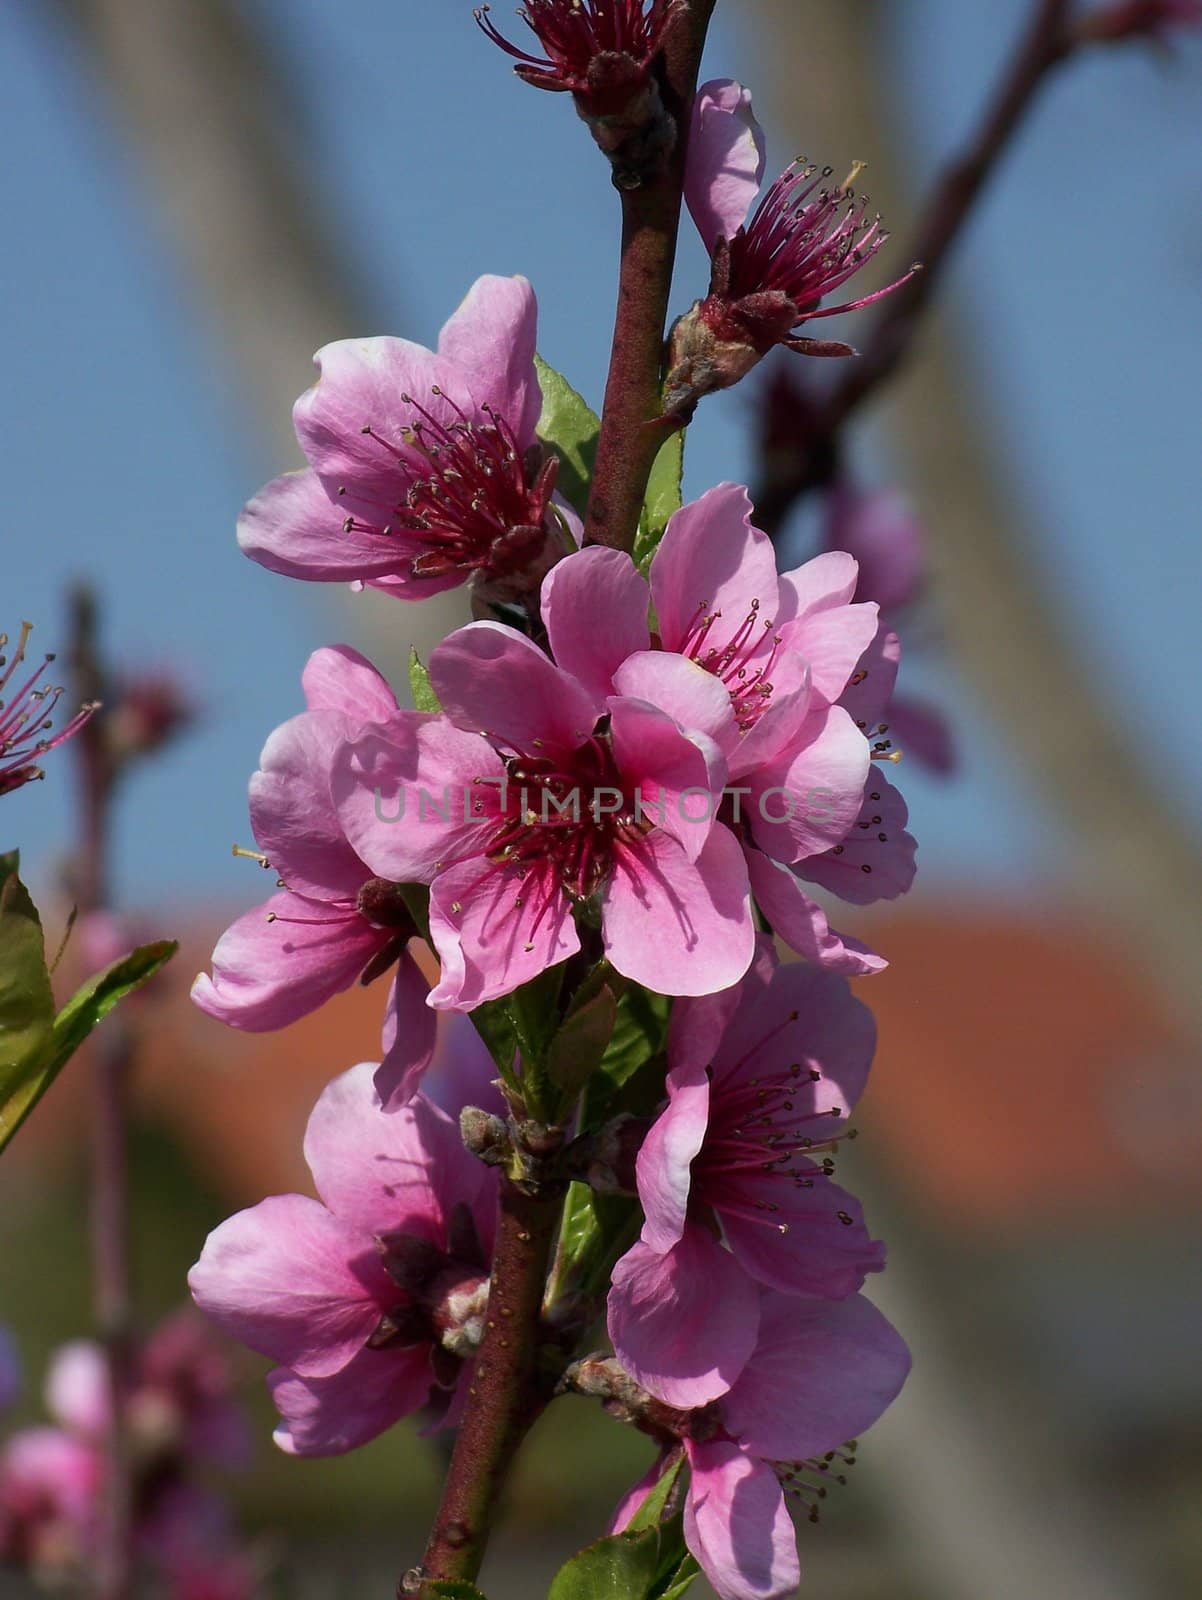 peach tree blossoms by kasipics